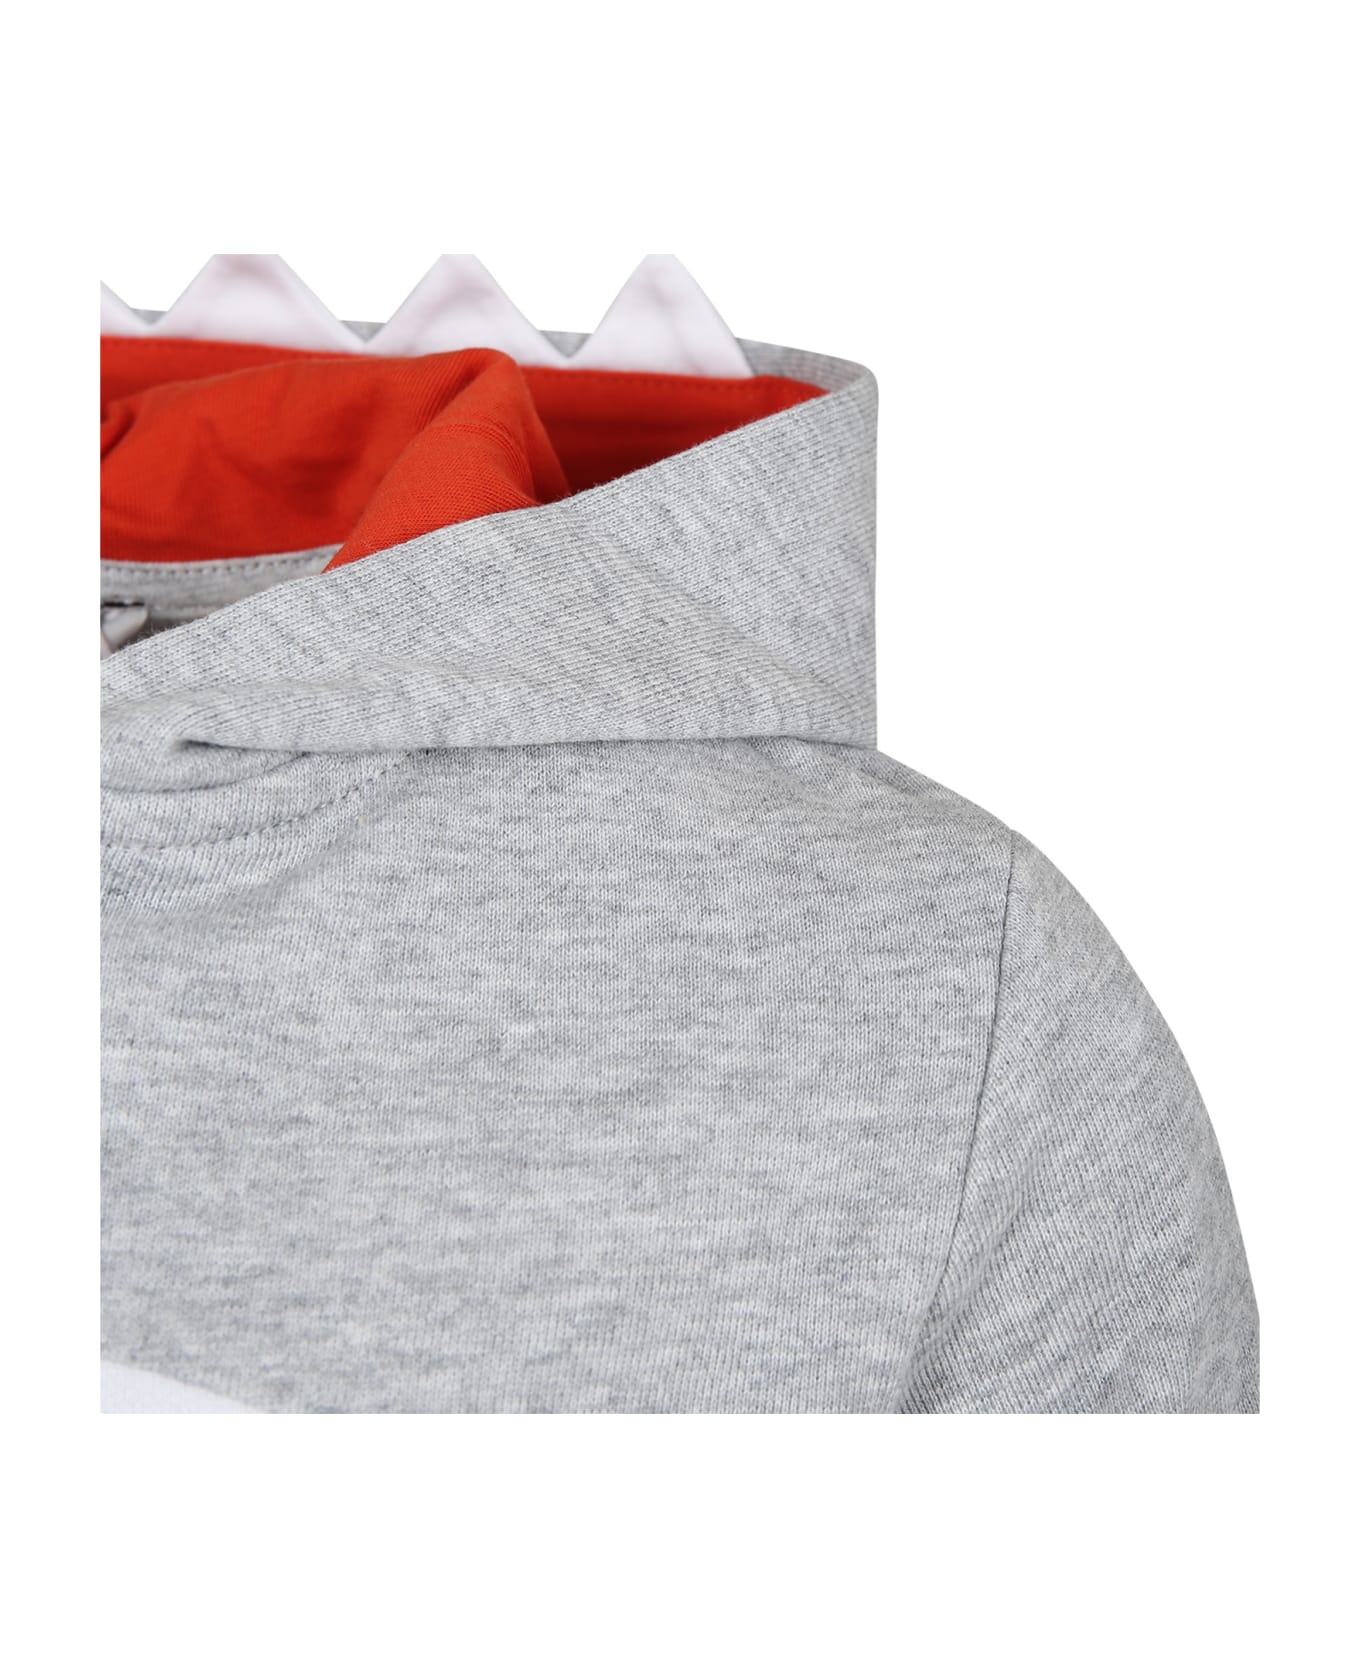 Stella McCartney Kids Gray Sweatshirt For Boys With Print - Grey ニットウェア＆スウェットシャツ